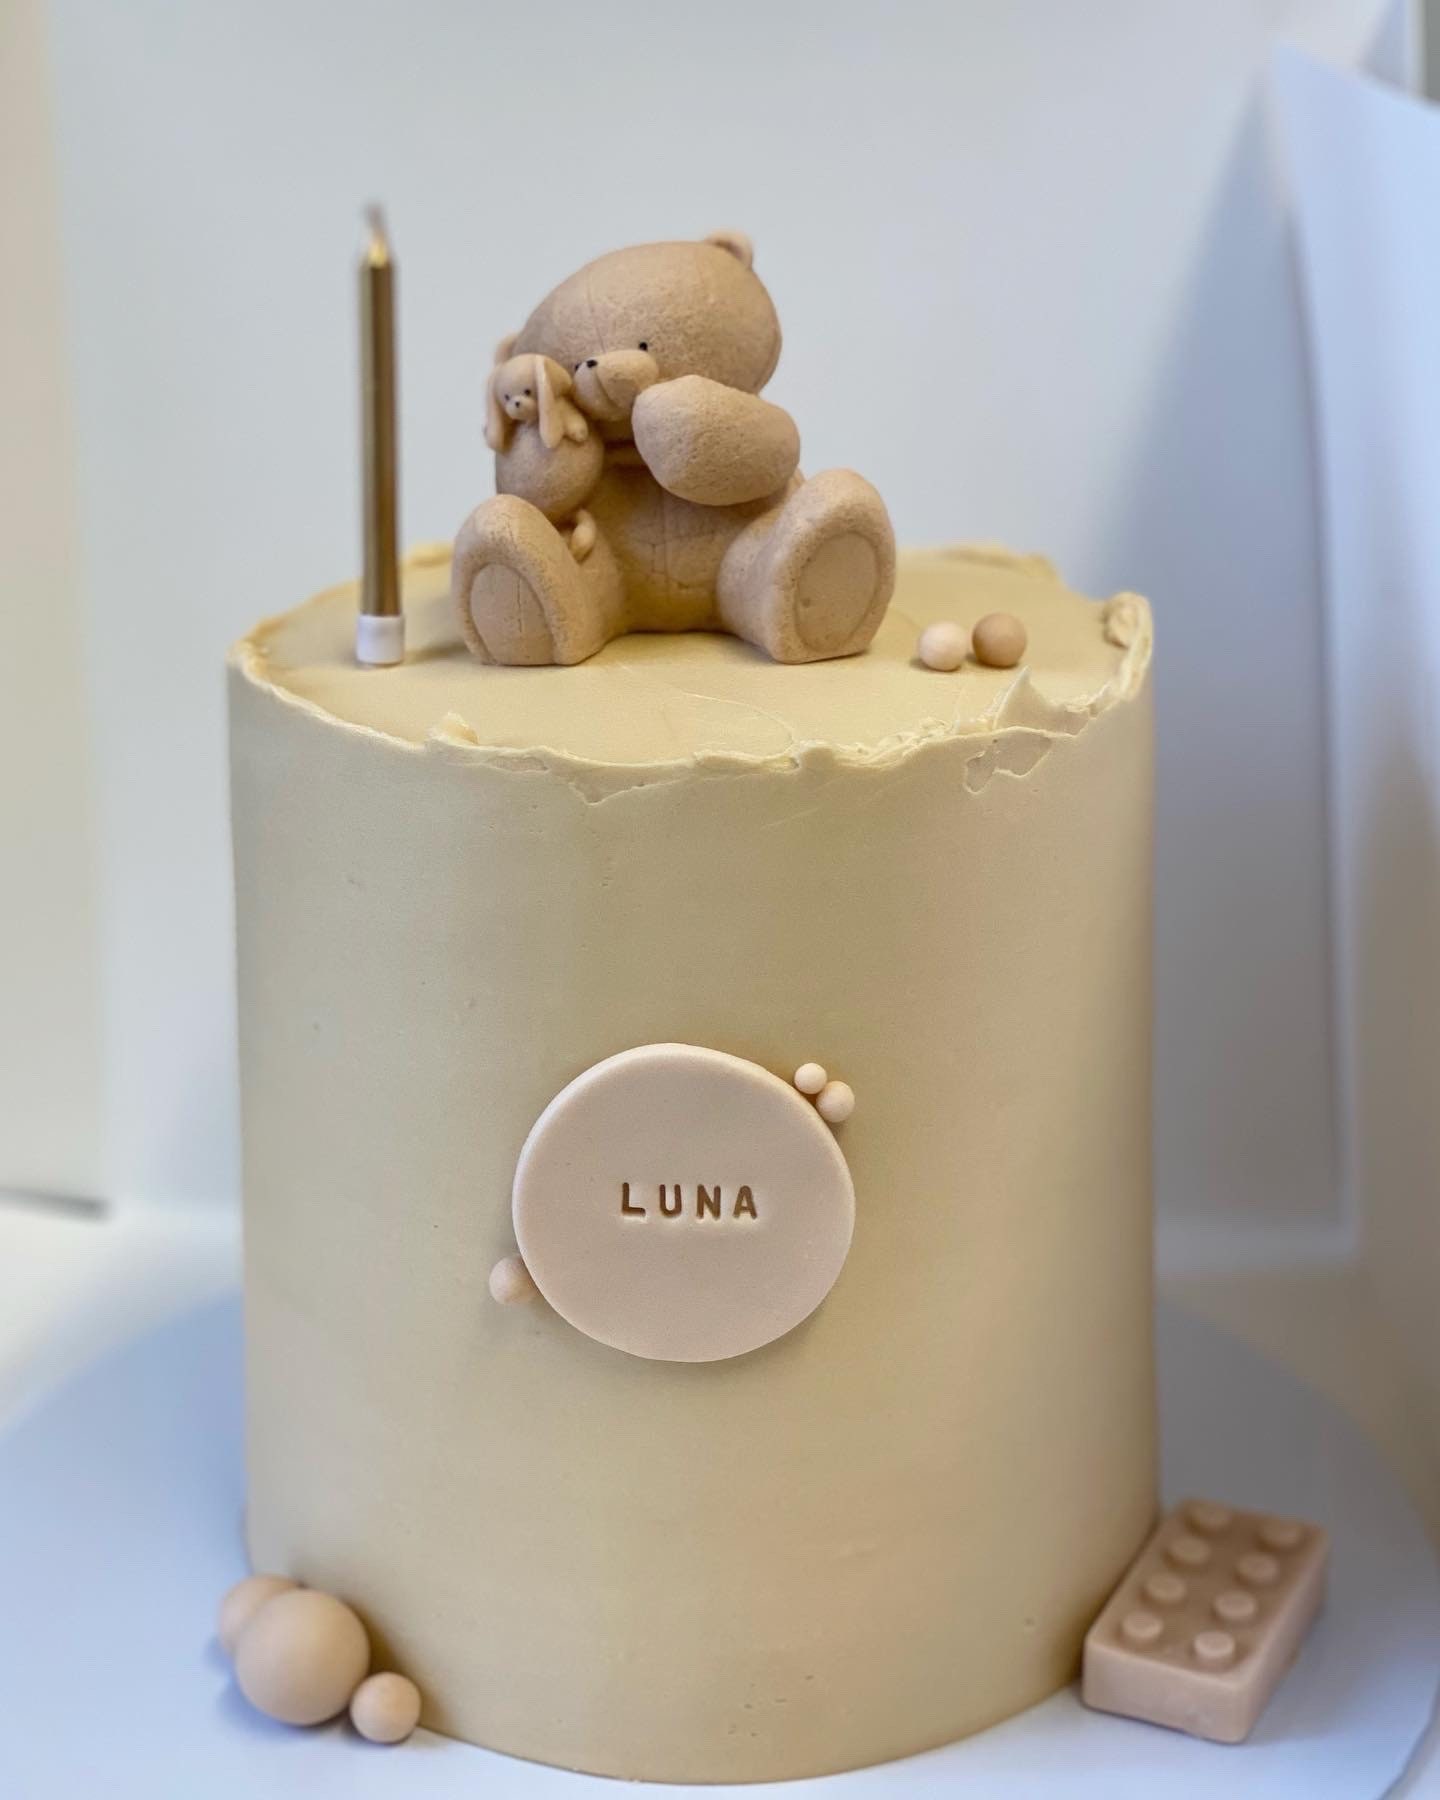 IKOJING Large Luxury Teddy Bear Fondant Silicone Molds, 4-Pack Baby Shower  Party Cake Decorating Mol…See more IKOJING Large Luxury Teddy Bear Fondant